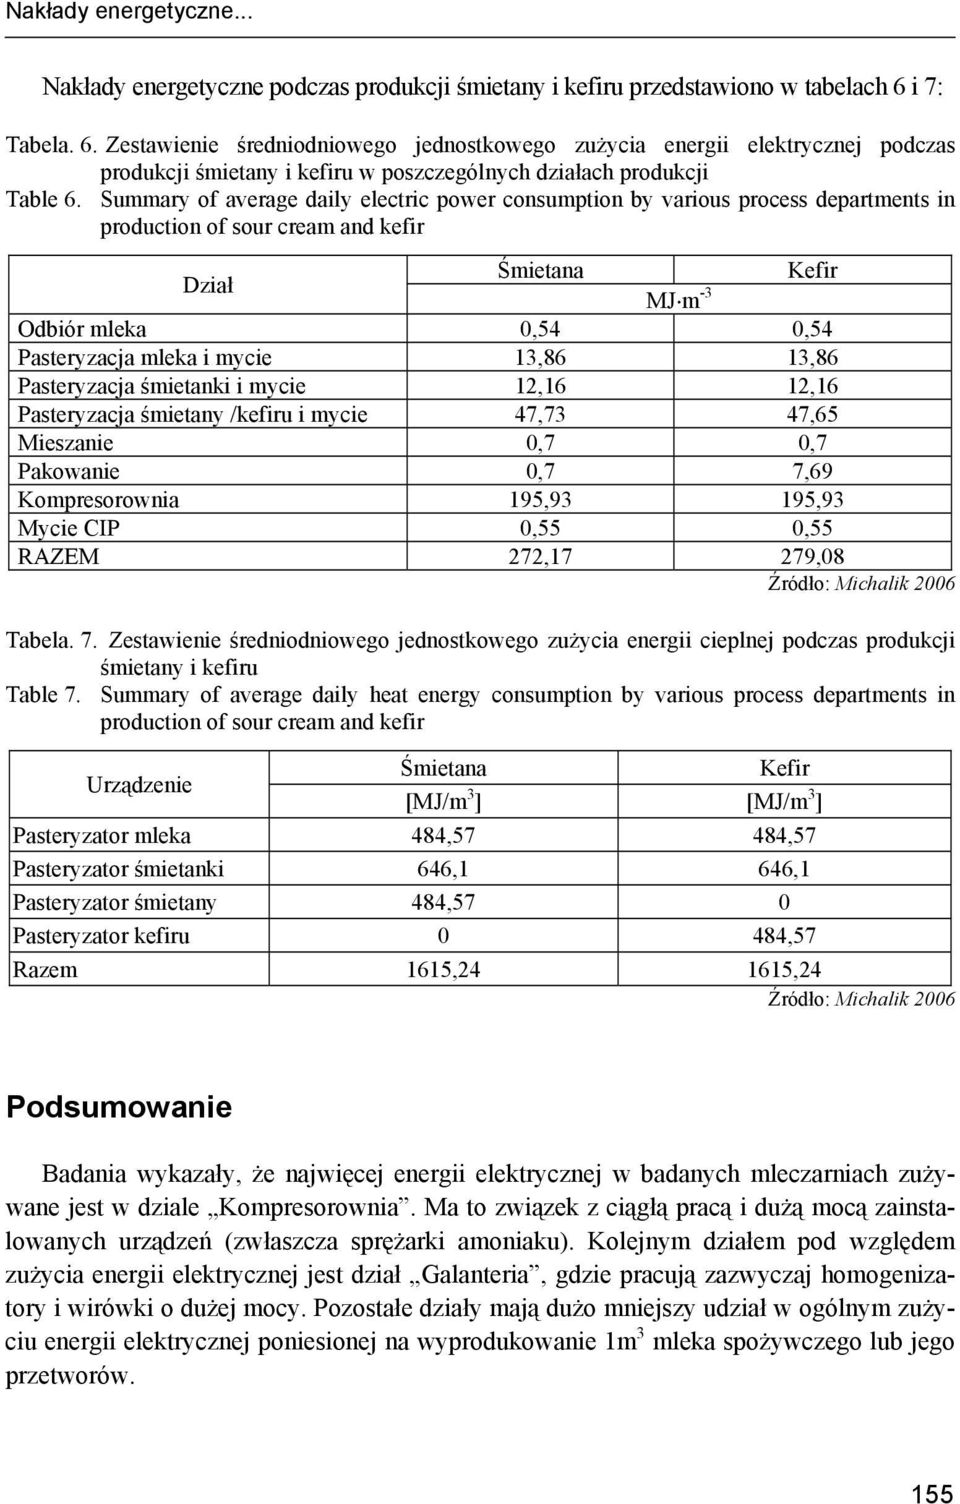 Summary of average daily electric power consumption by various process departments in production of sour cream and kefir Dział Śmietana Kefir Odbiór mleka 0,54 0,54 Pasteryzacja mleka i mycie 13,86